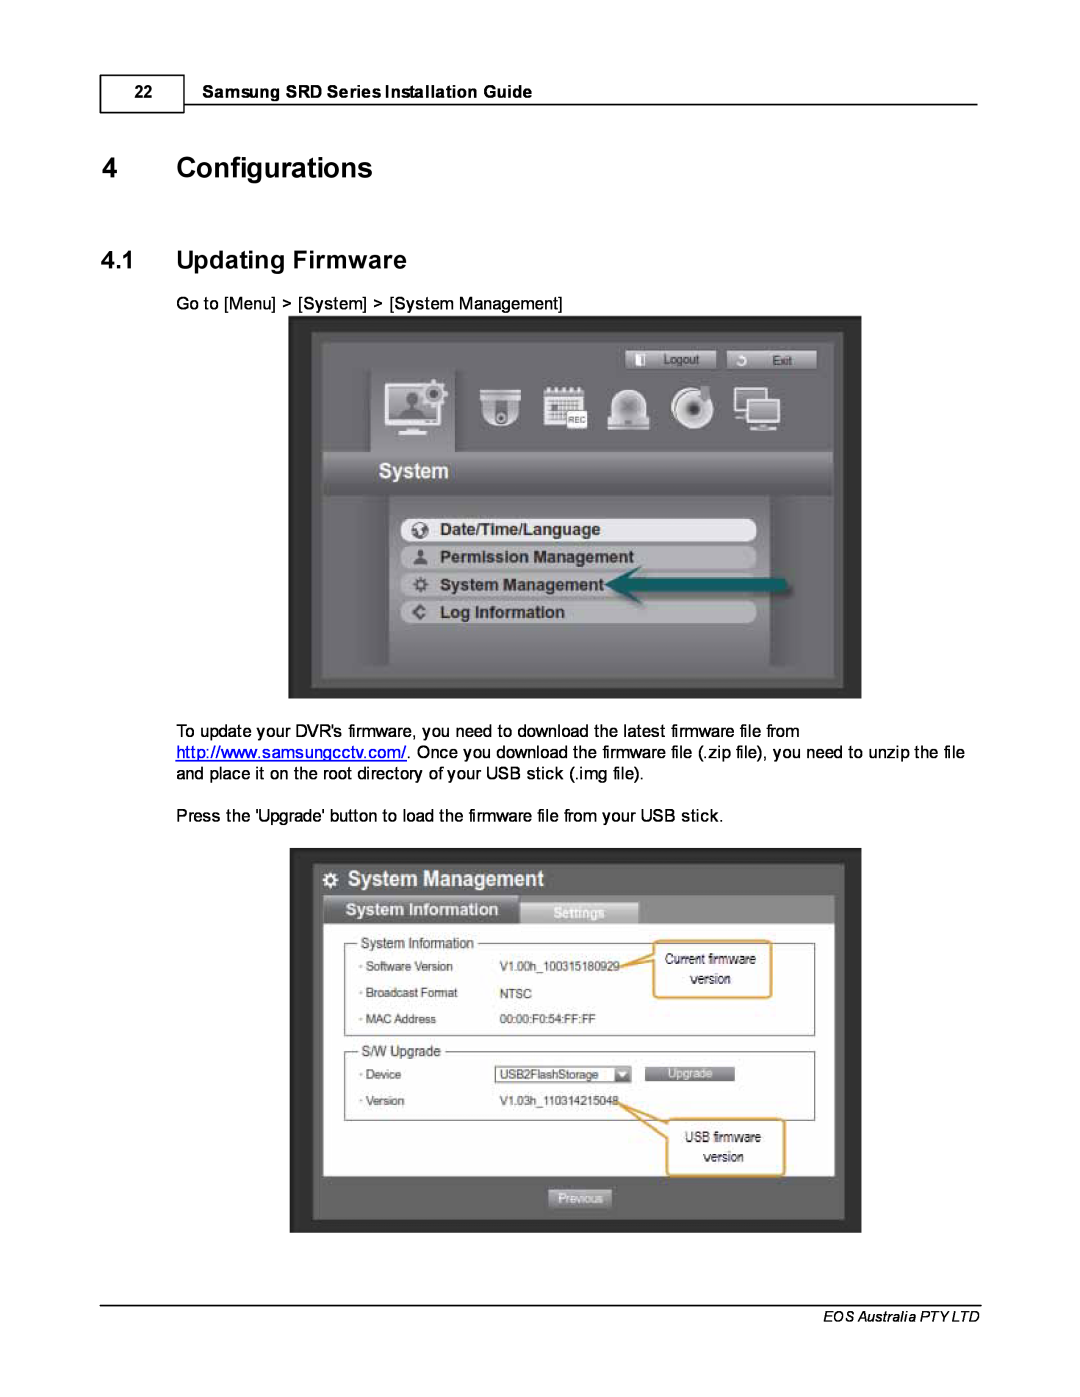 Samsung SDR4200 manual 4Configurations, 4.1Updating Firmware, Samsung SRD Series Installation Guide 